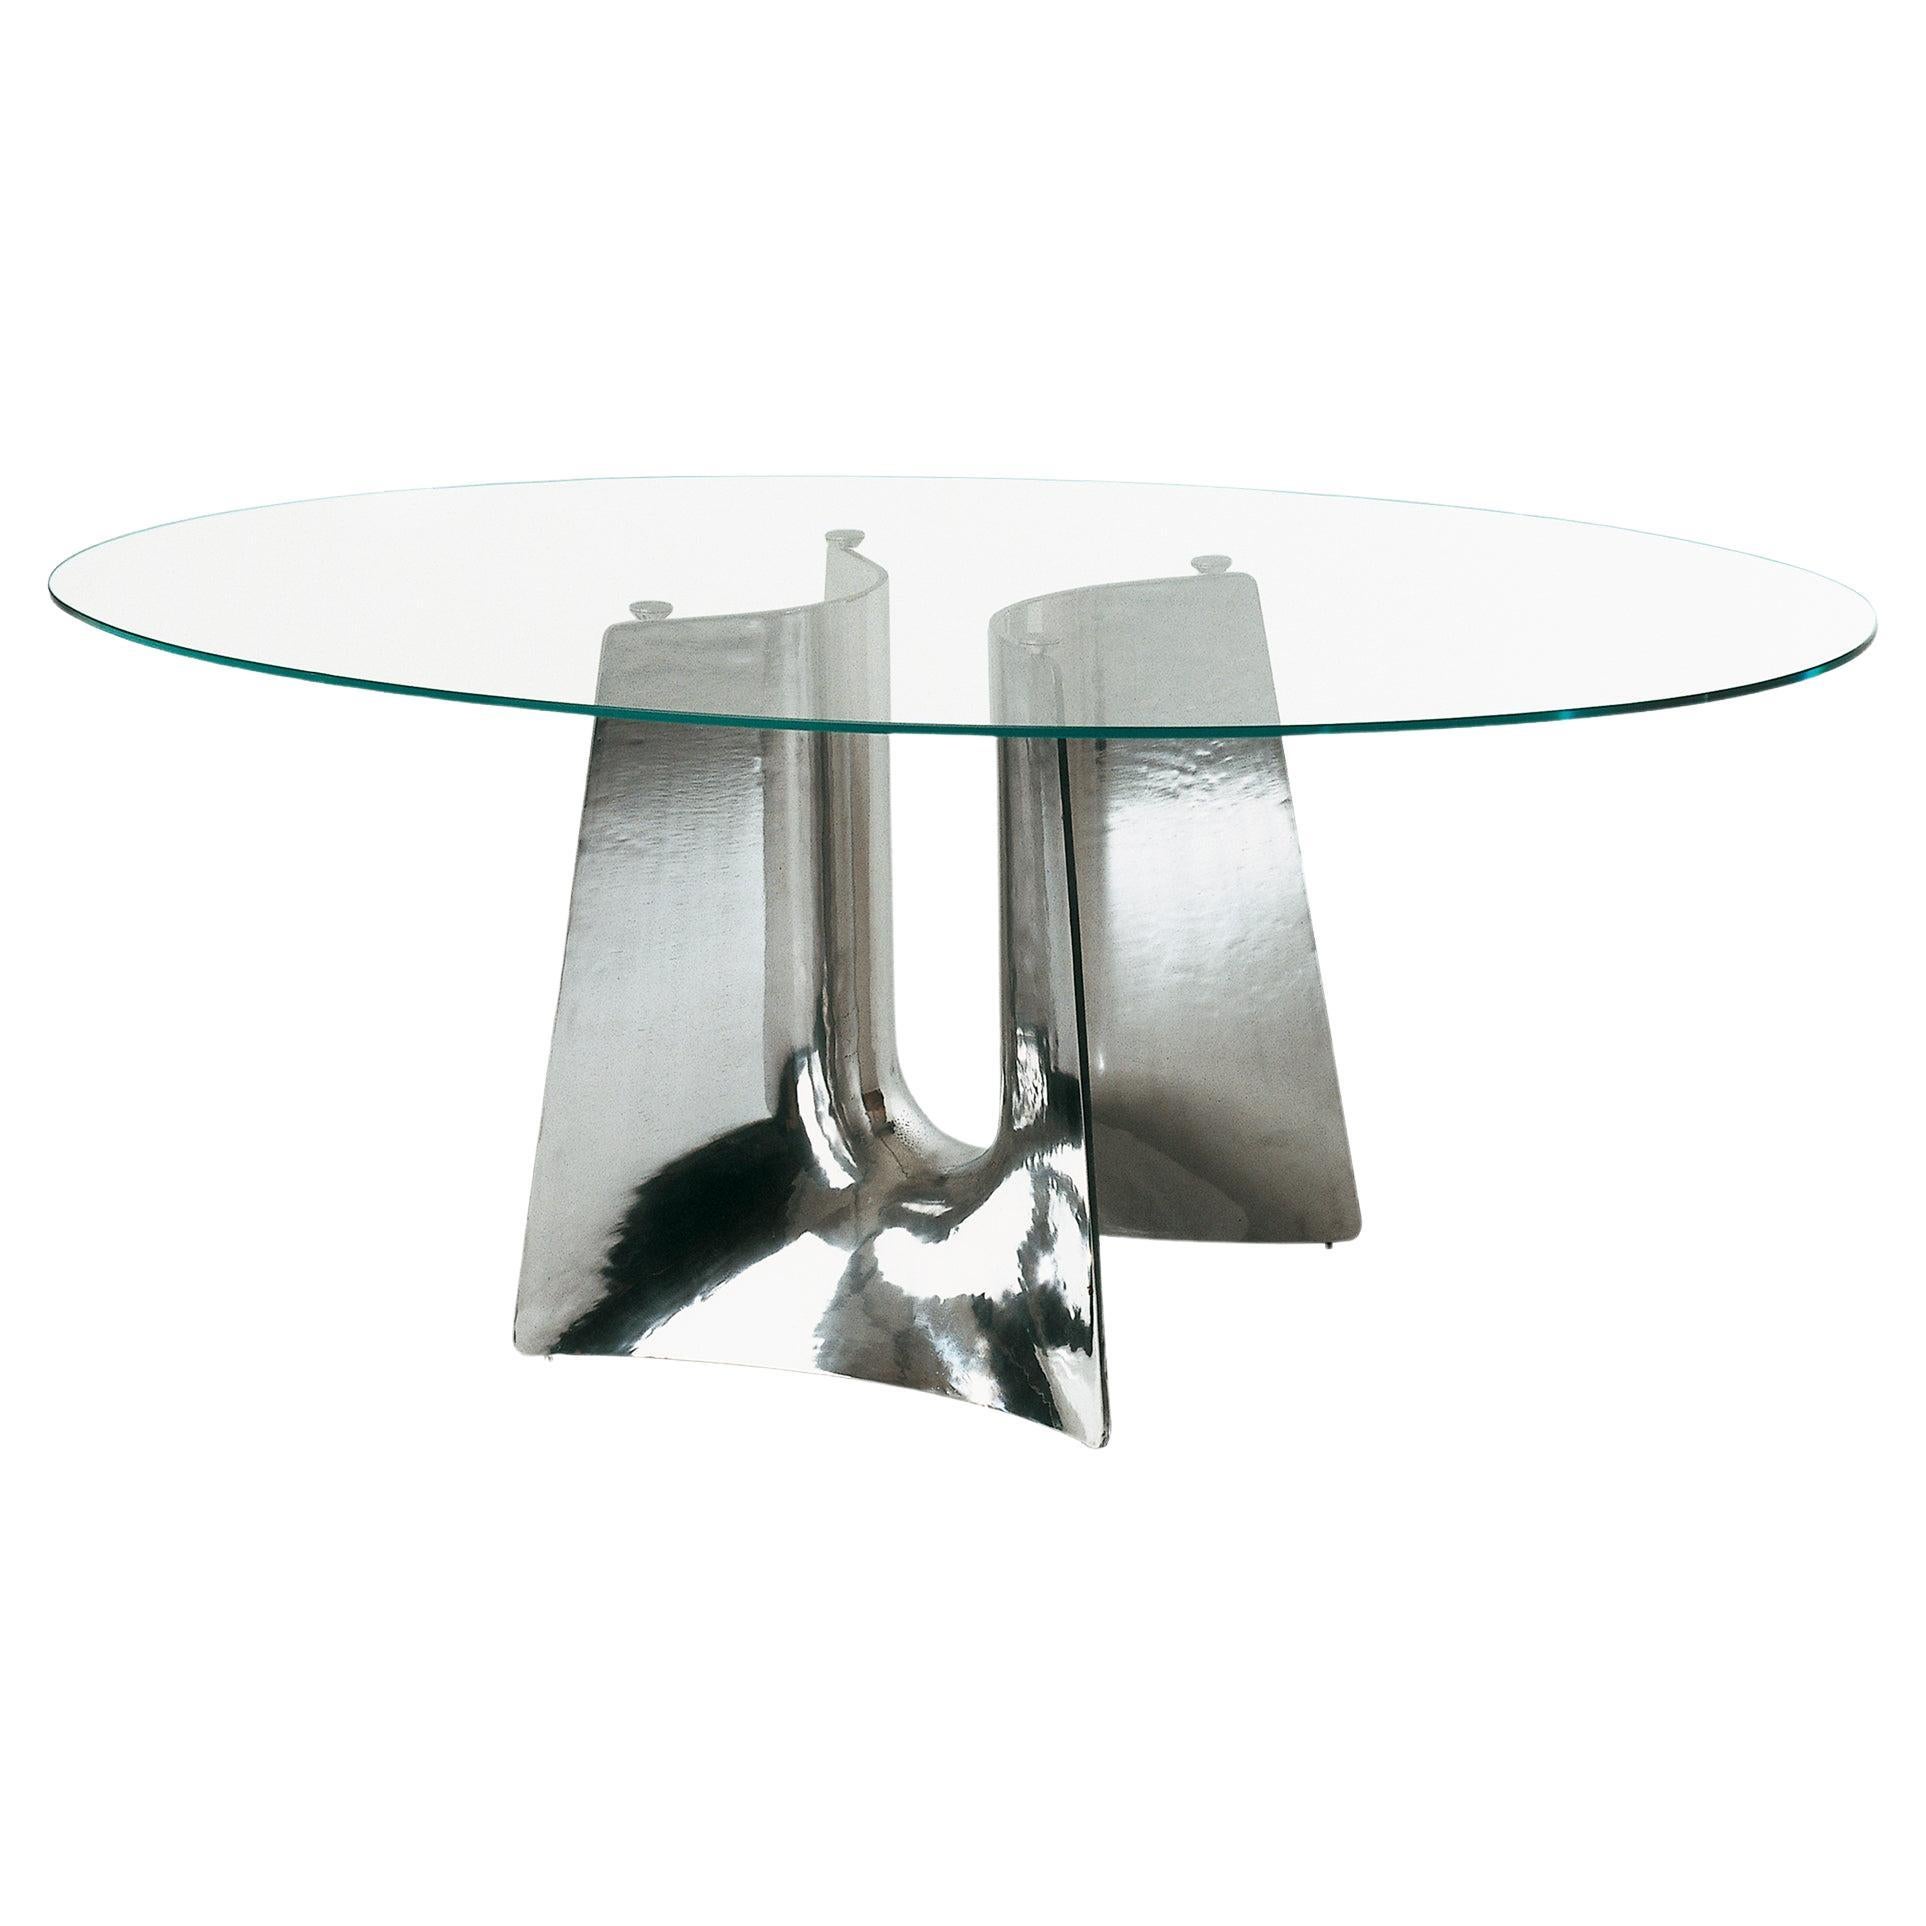 Baleri Italia Bentz High Round Aluminum Table with Glass Top by Jeff Miller